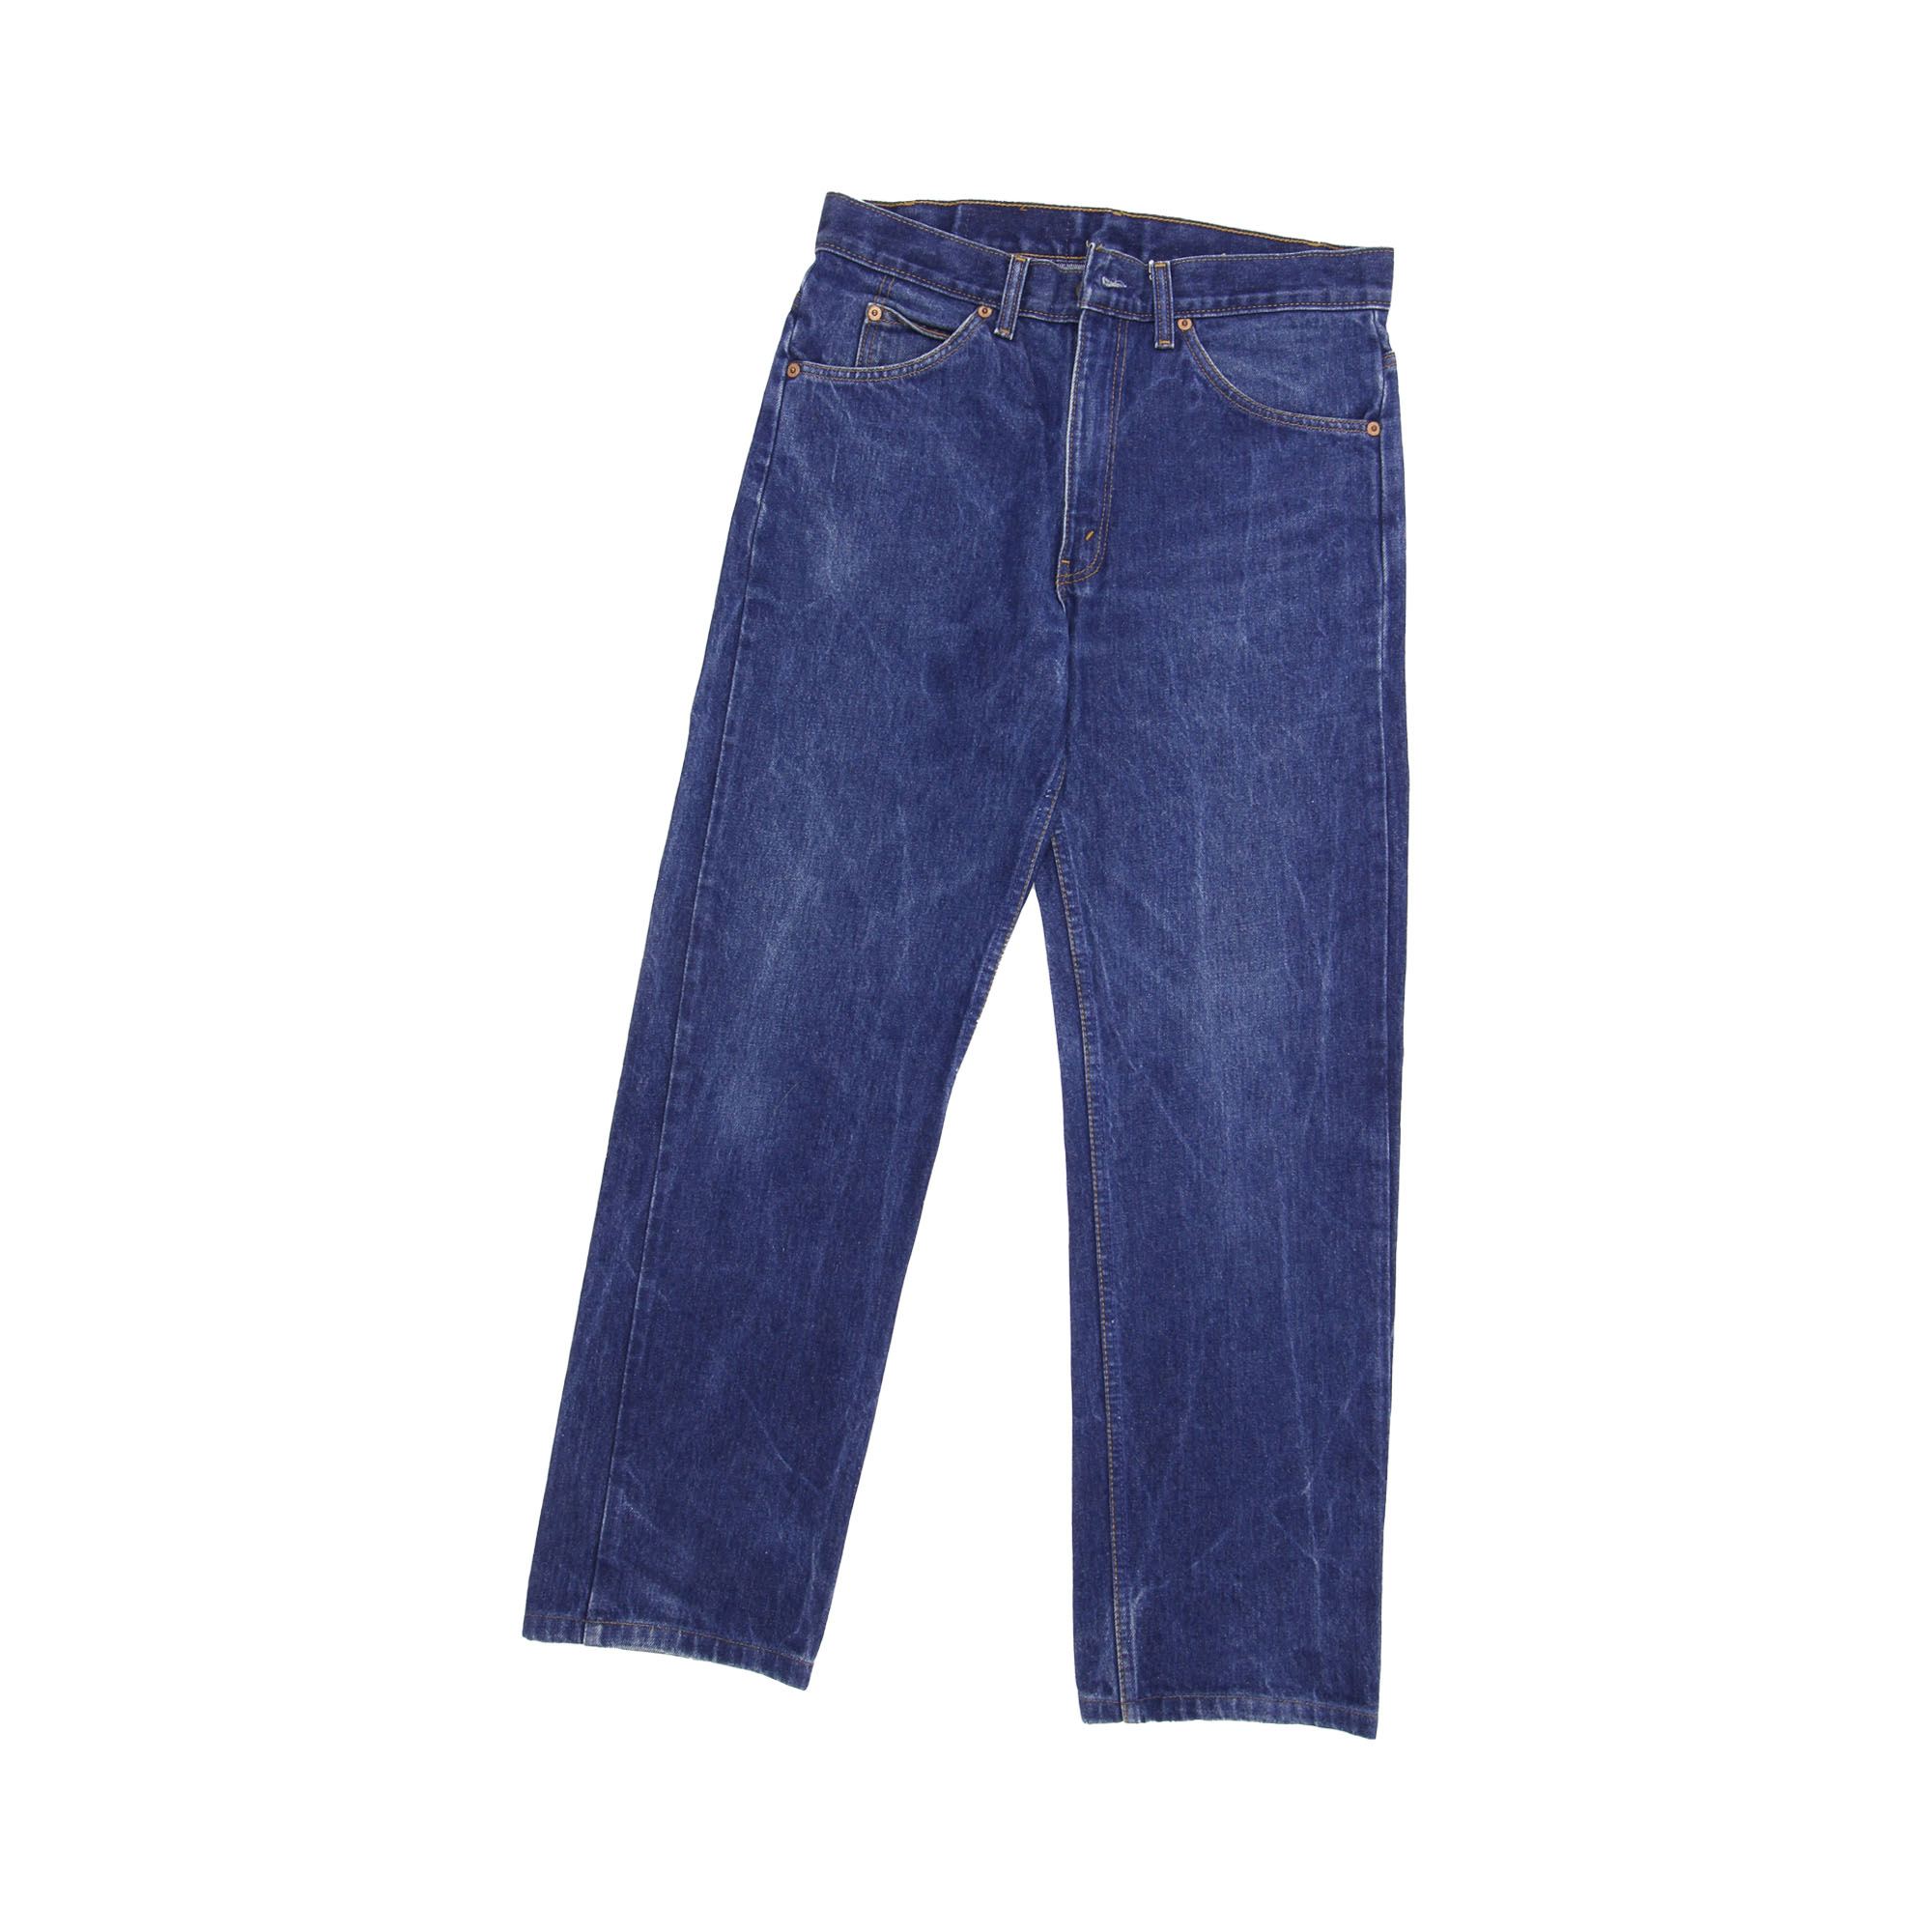 Levi's Jeans -  W31 L34